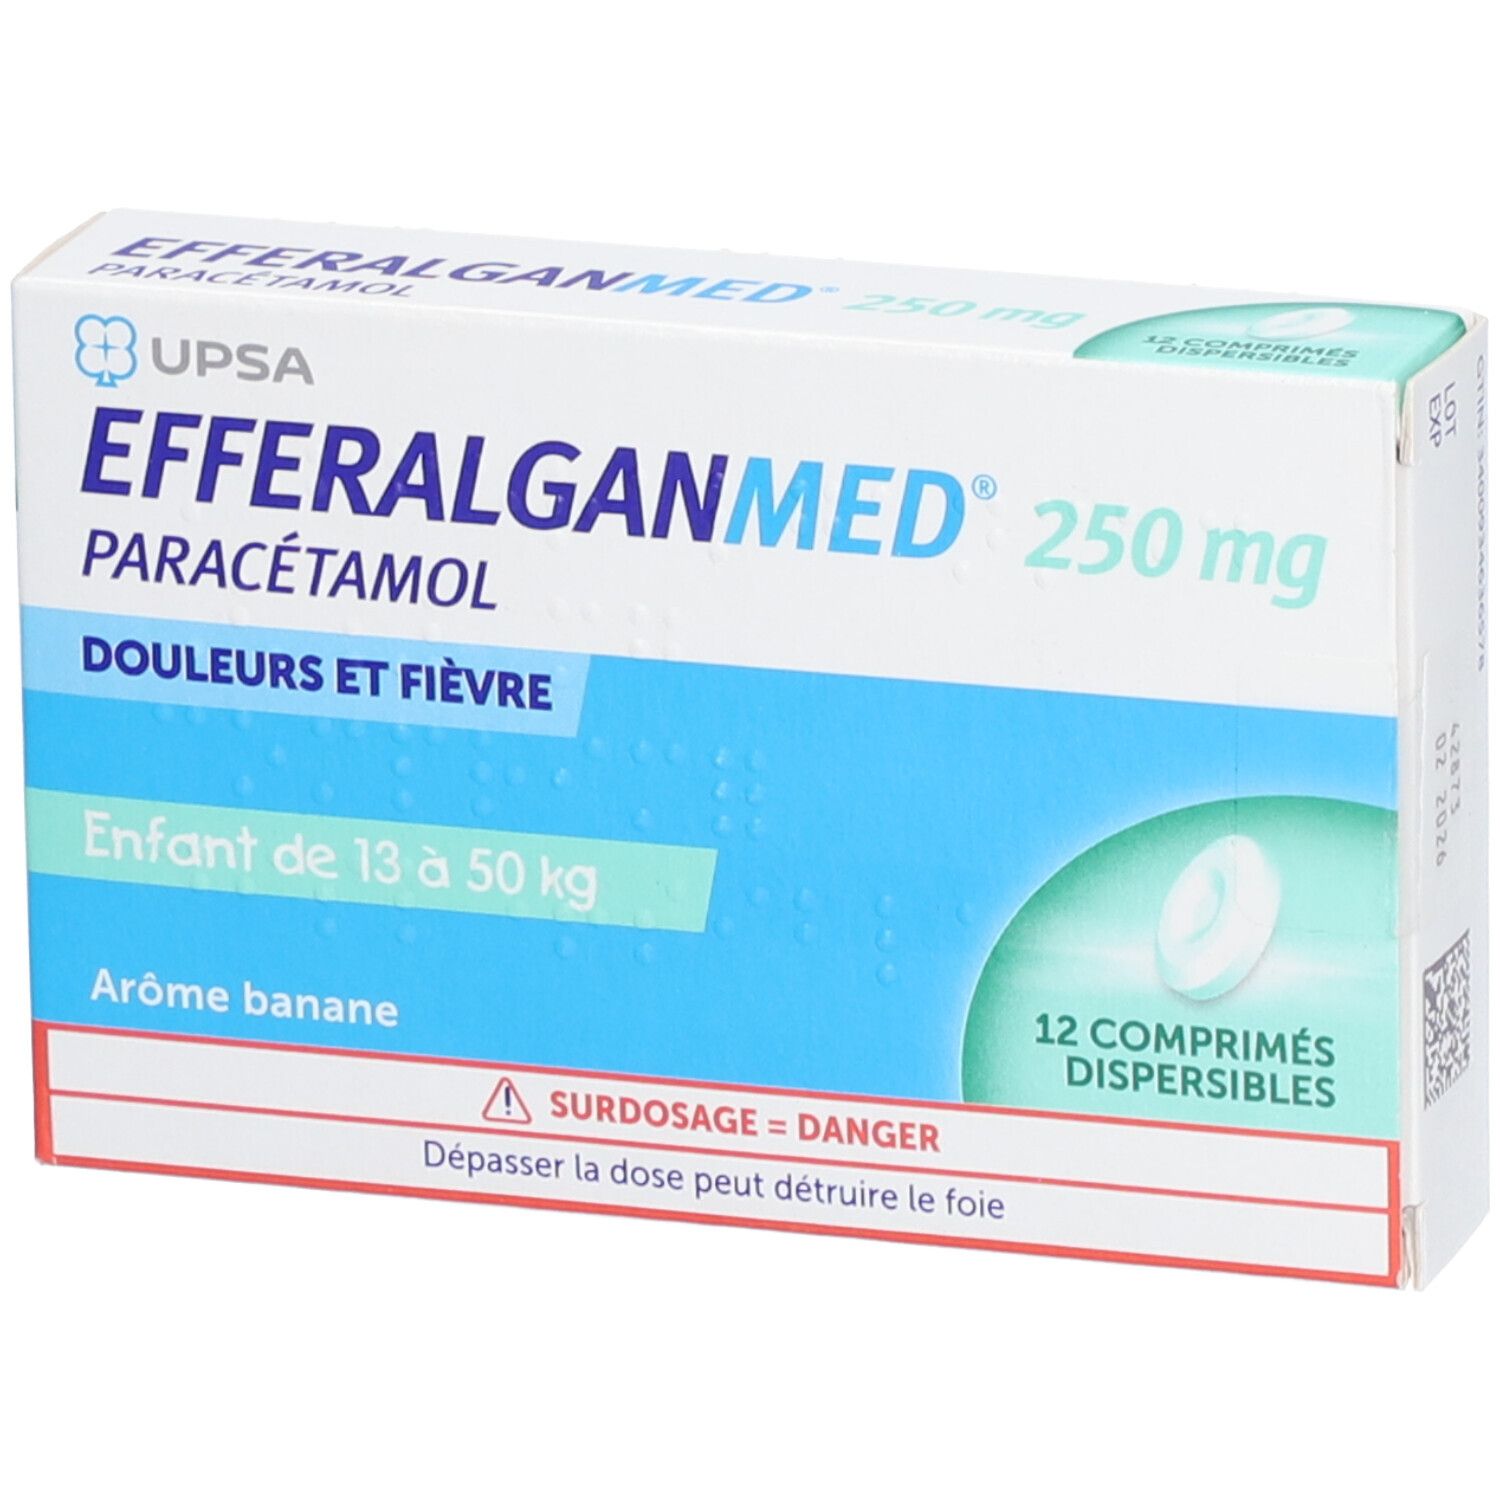 Efferalganmed® 250 mg